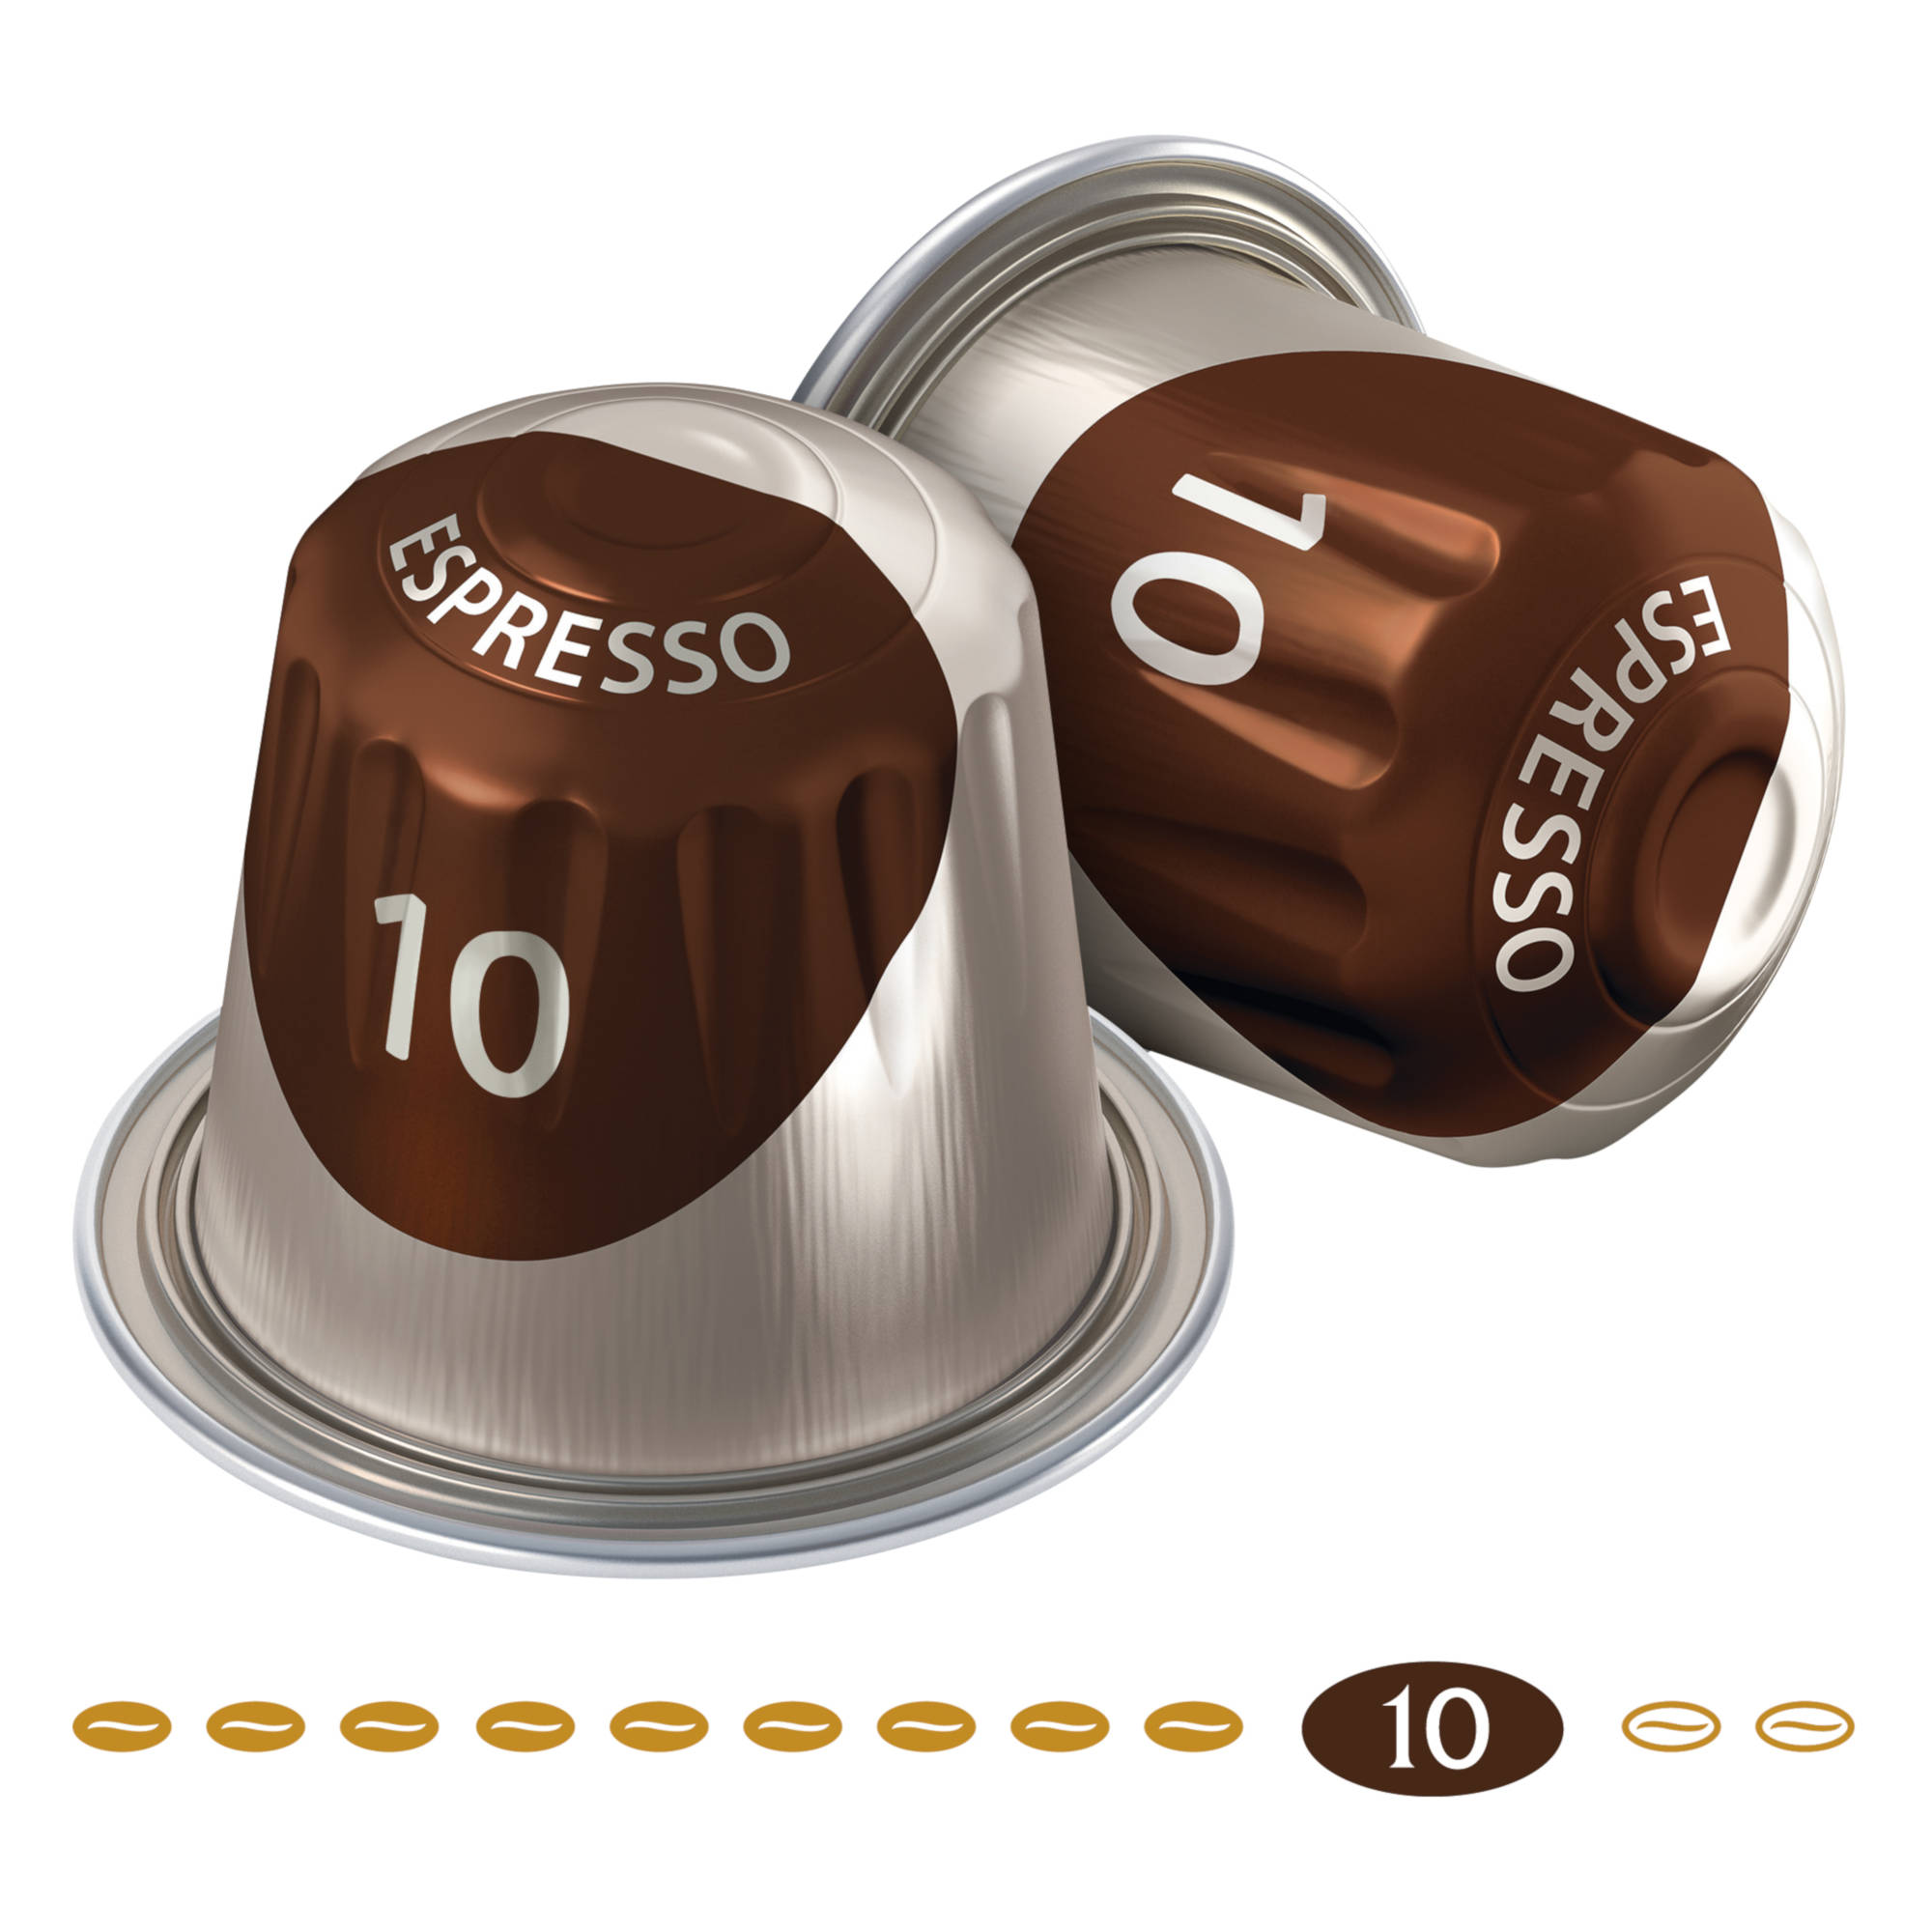 Intenso x 10 JACOBS Kaffeekapseln kompatible Espresso System) 10 20 Nespresso®* (Nespresso